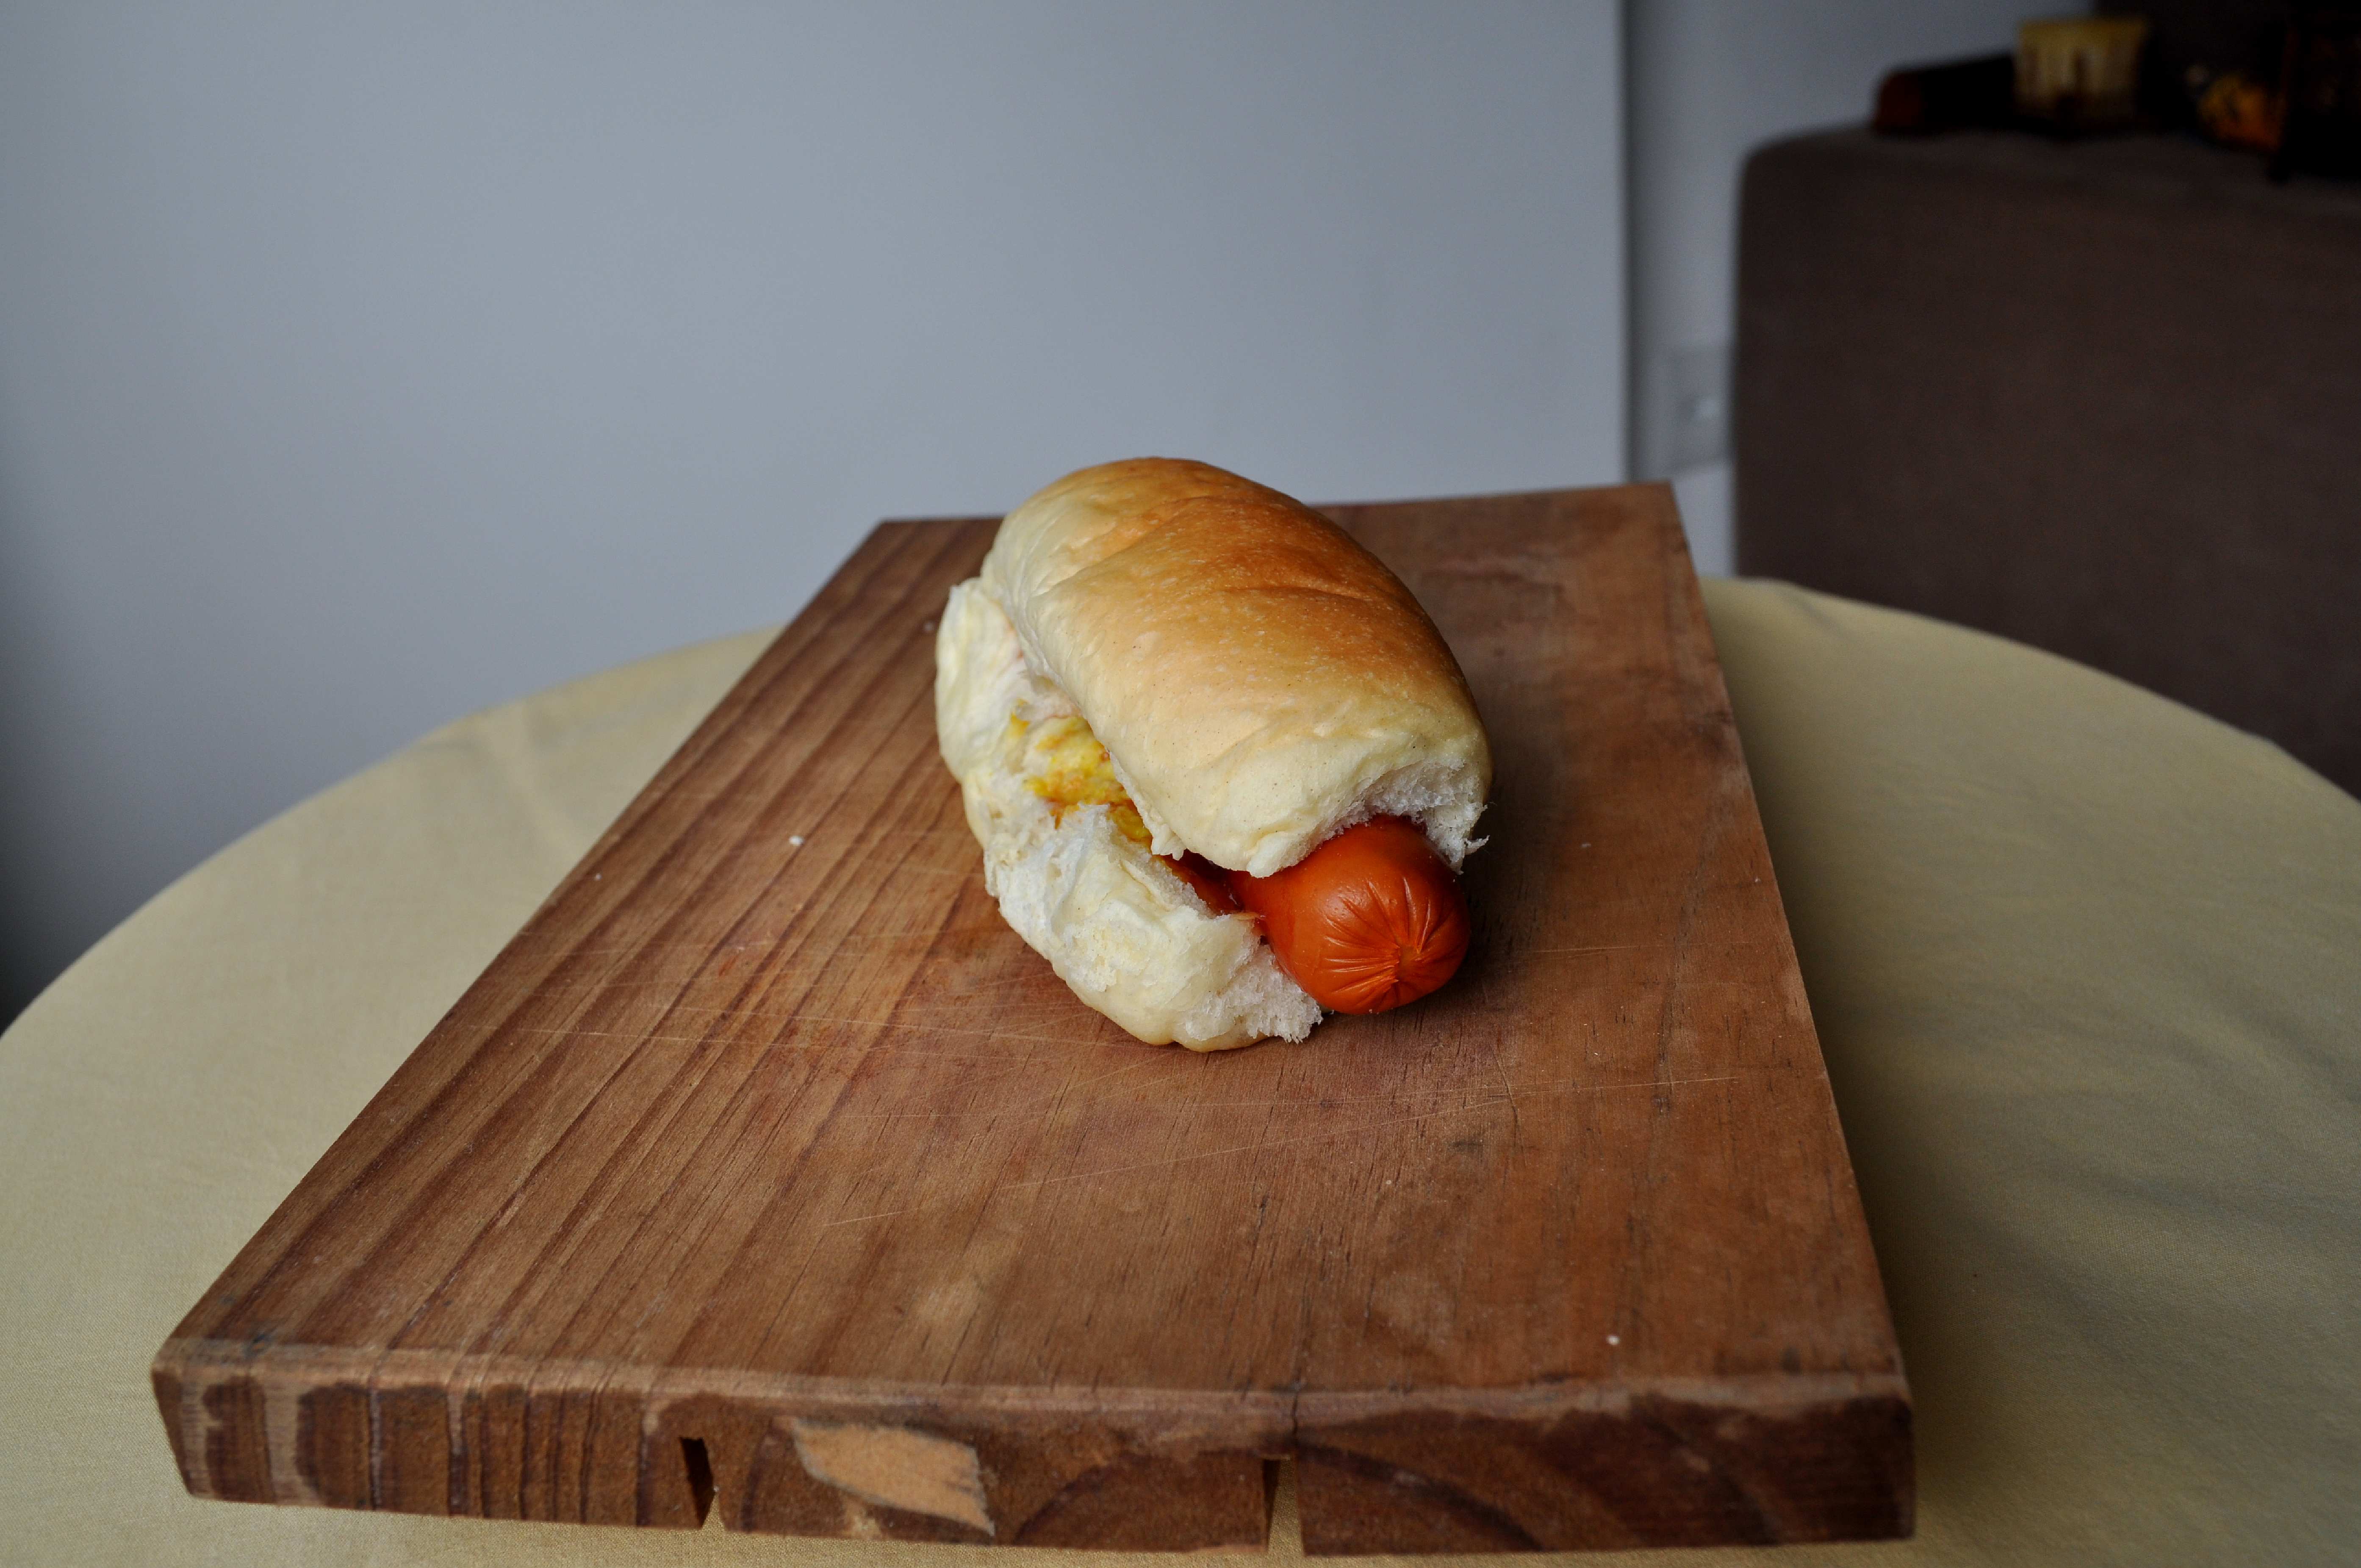 Foto gratis: panino, pane, salsicce, legno, piastra